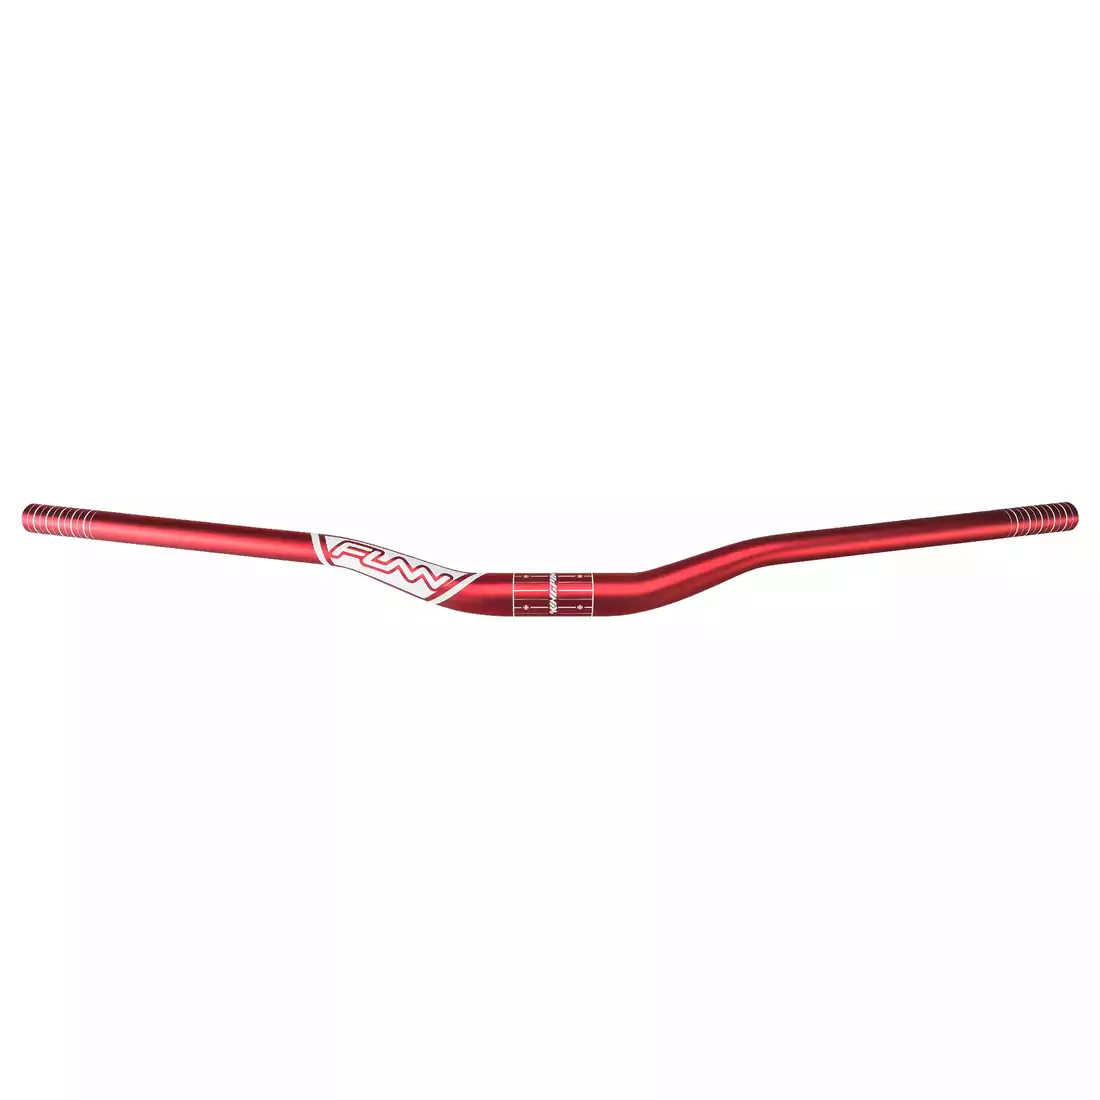 FUNN KINGPIN 785/31,8/15 mm Bicycle handlebars Red